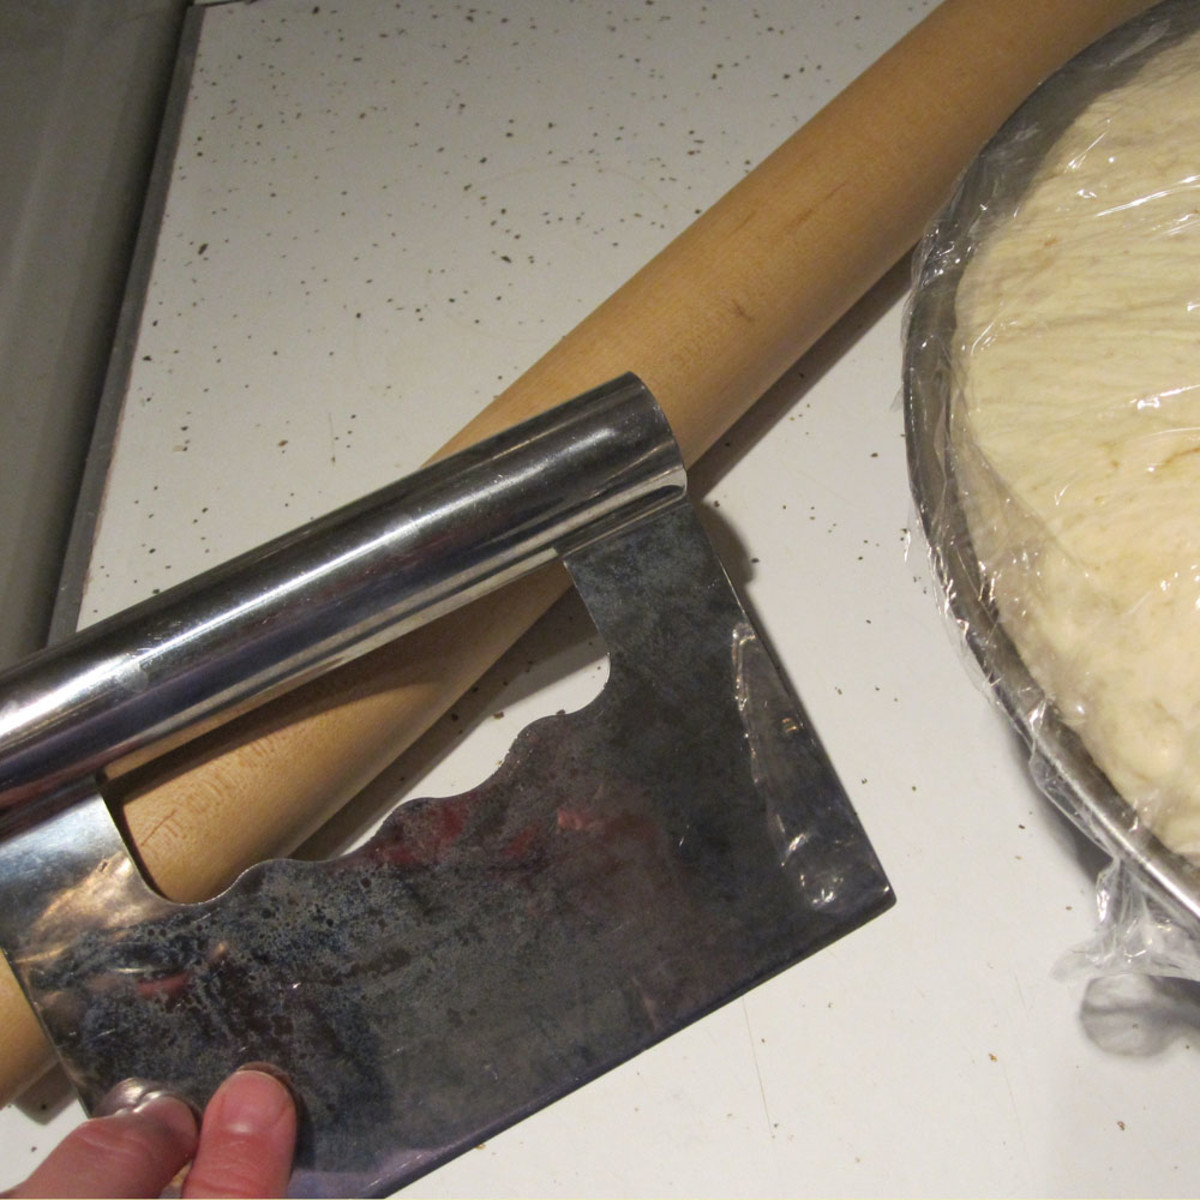 https://images.saymedia-content.com/.image/t_share/MTc0NjE4NjE2MjM3OTkxOTI2/how-to-bake-bread-with-your-kitchenaid-mixer.jpg